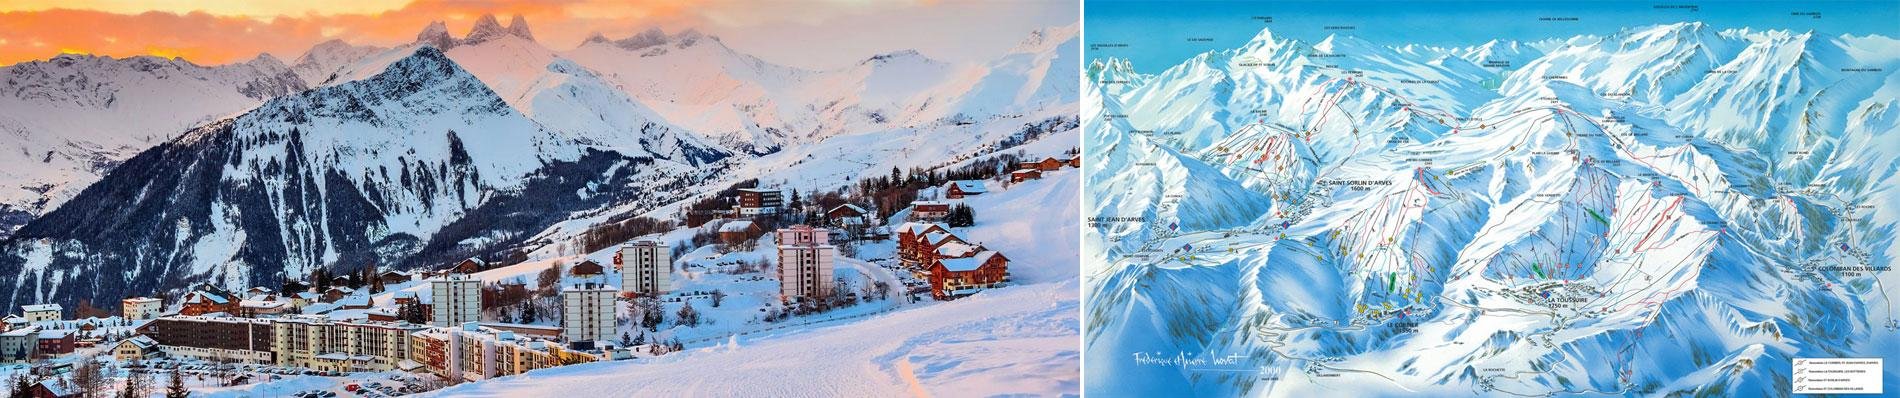 cgh alpaga la toussuire les sybelles wintersport ski frankrijk